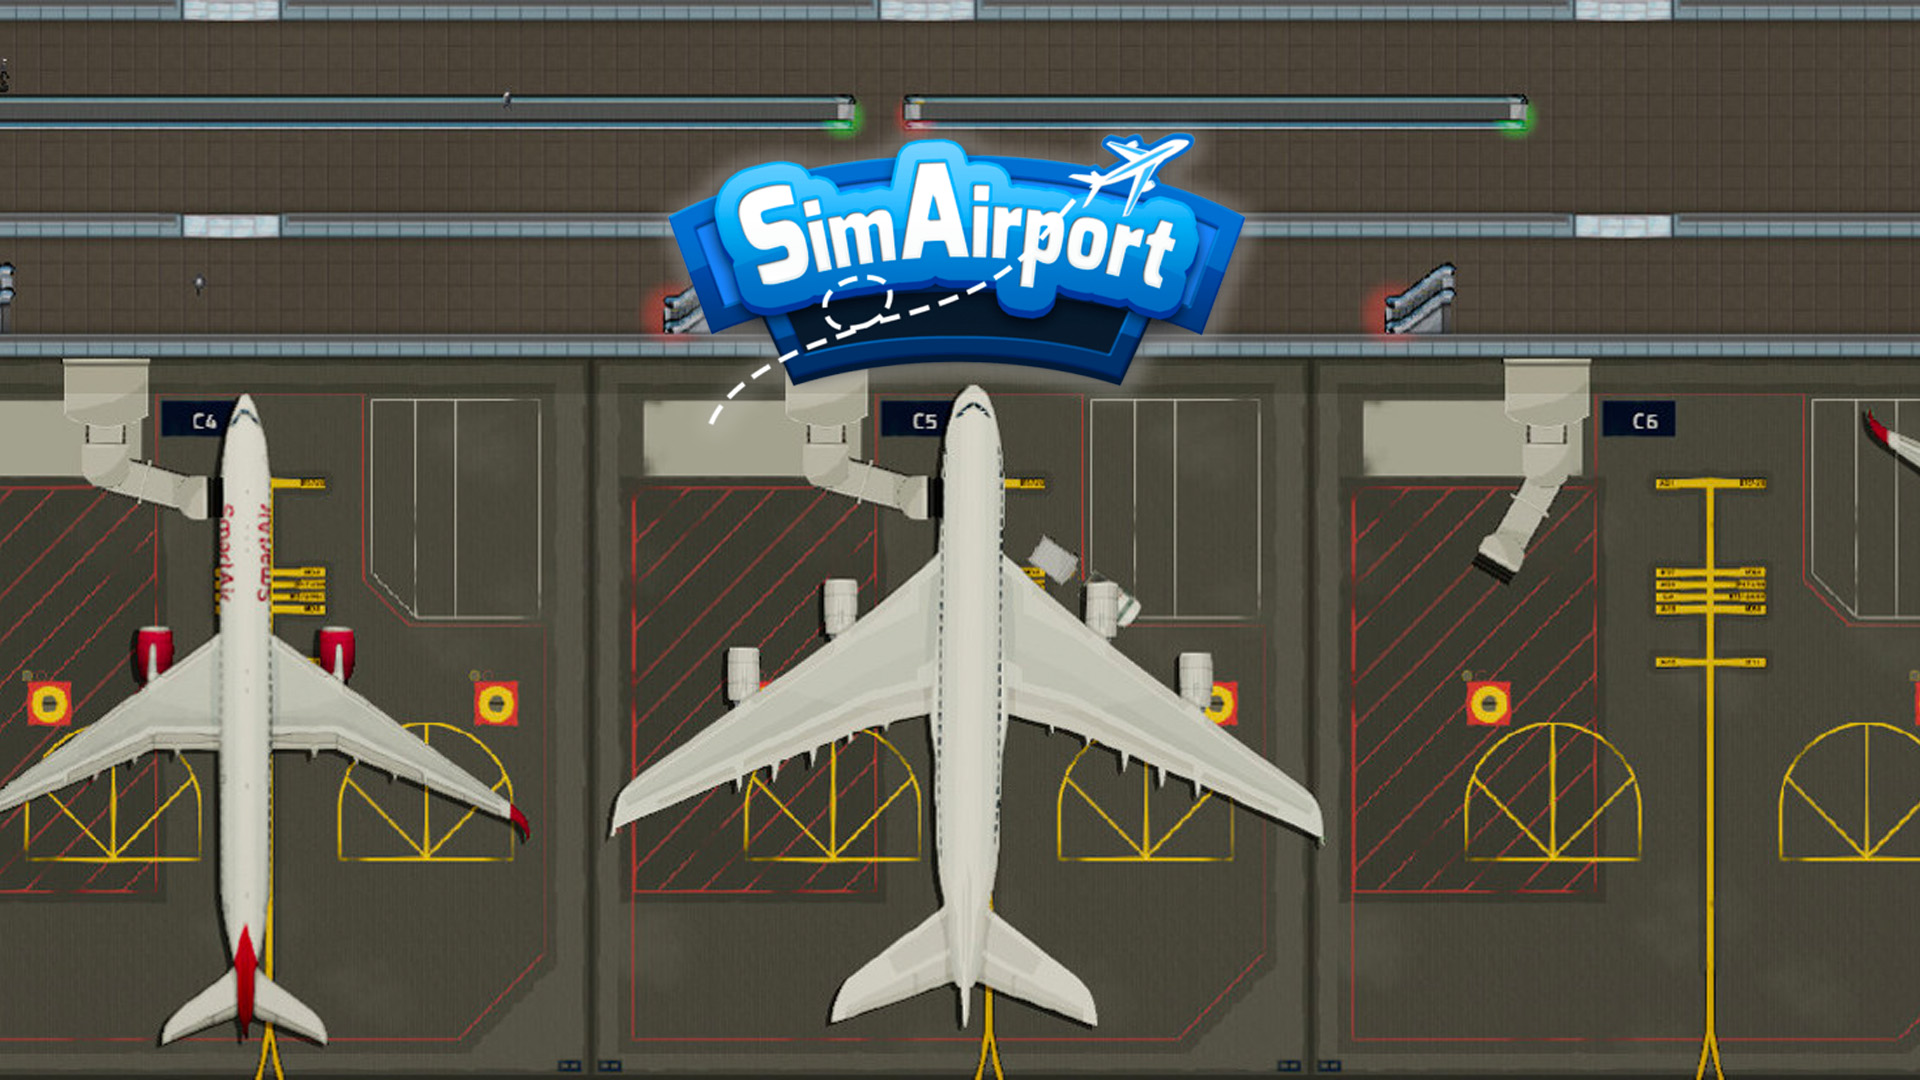 simairport text image.jpg